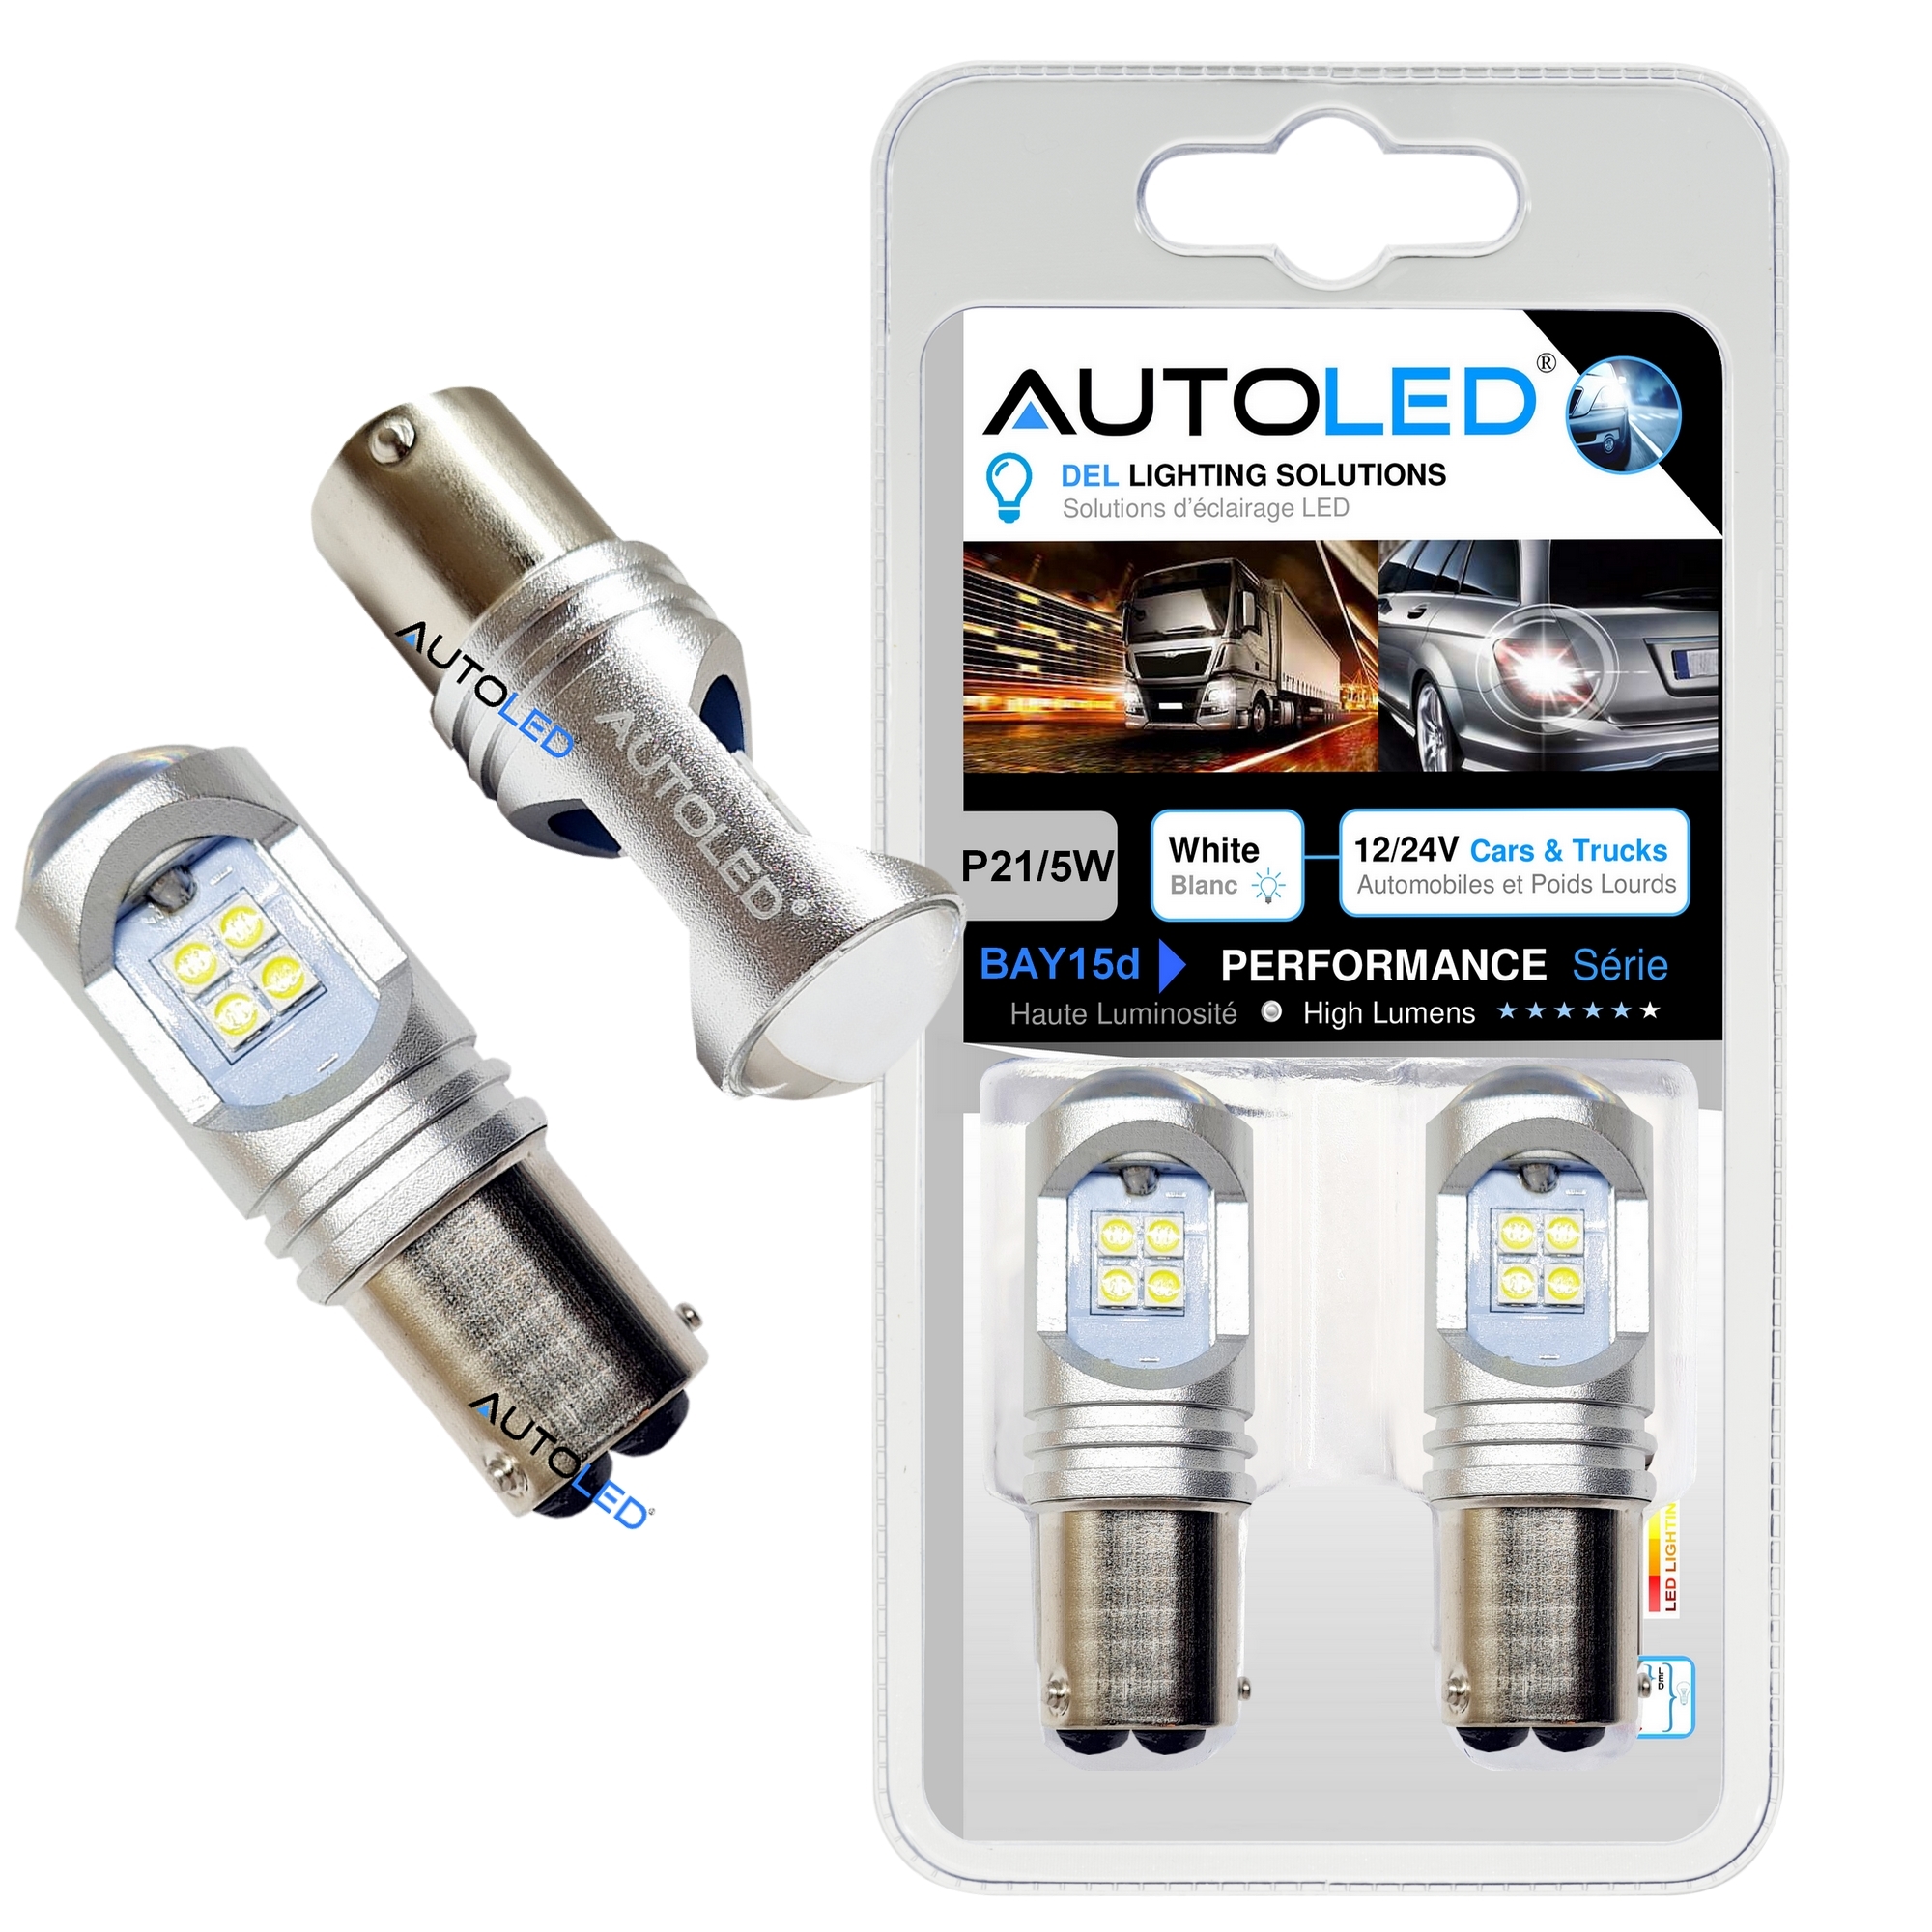 Ampoule P21/4W LED 24v /12v, Forte luminosité